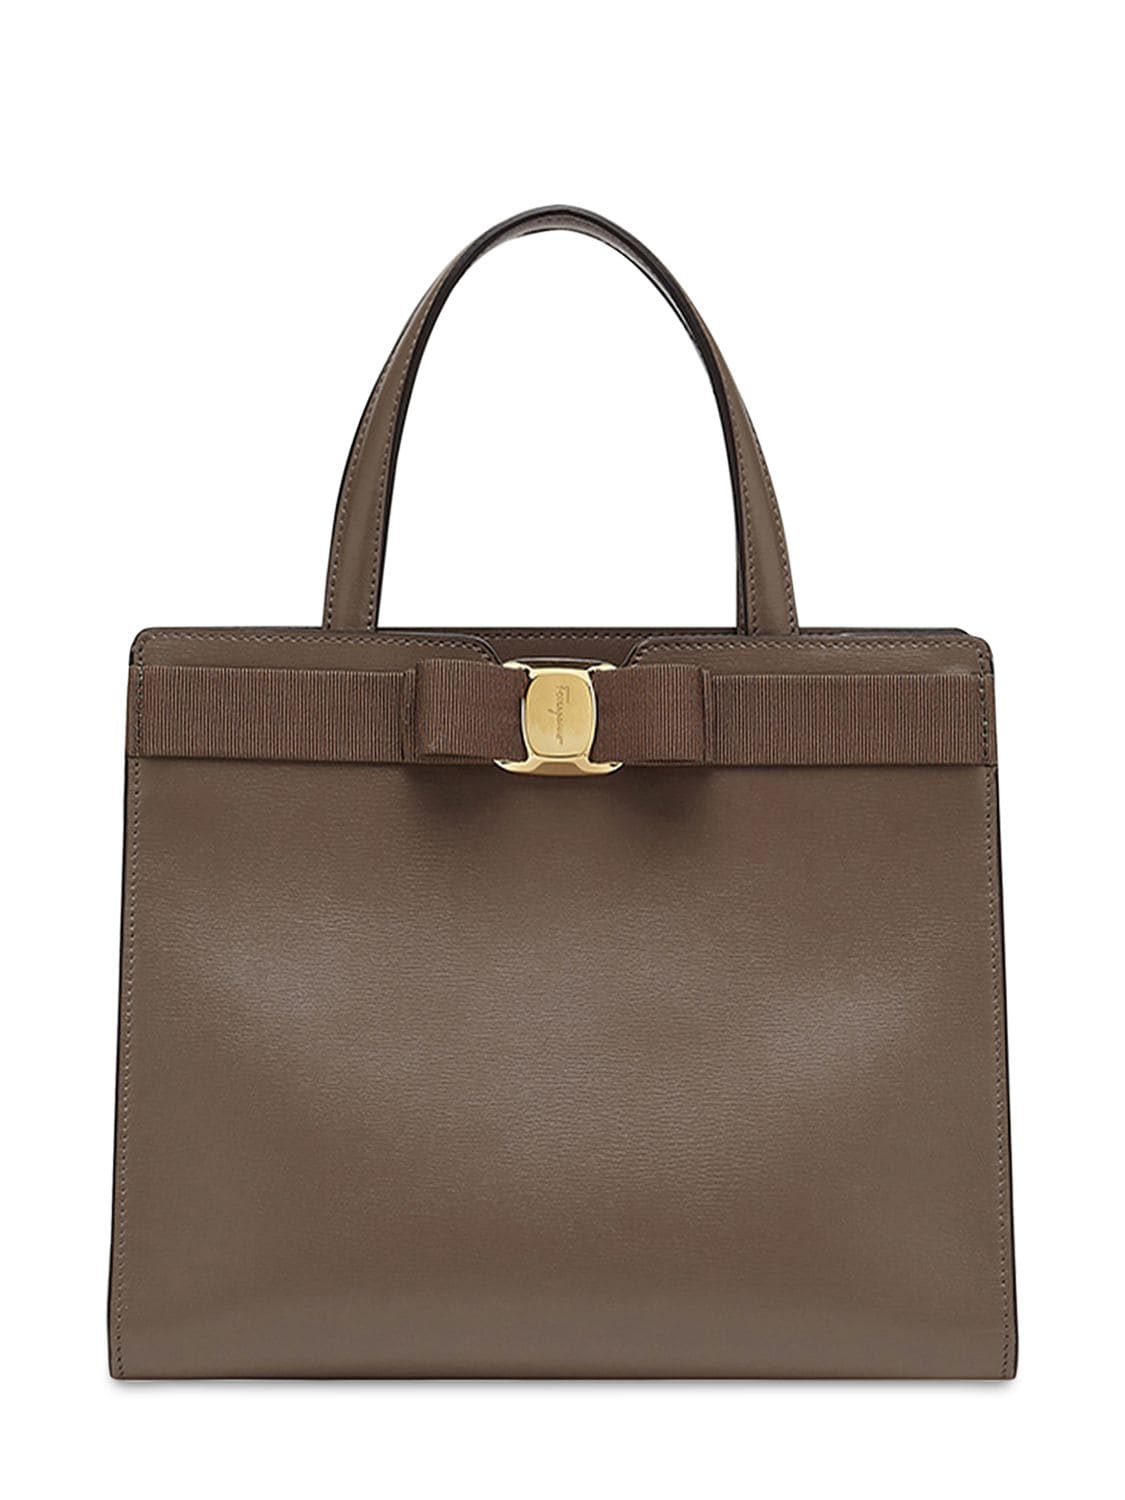 Salvatore Ferragamo New Vera Leather Top Handle Bag In Caraway Seed ...